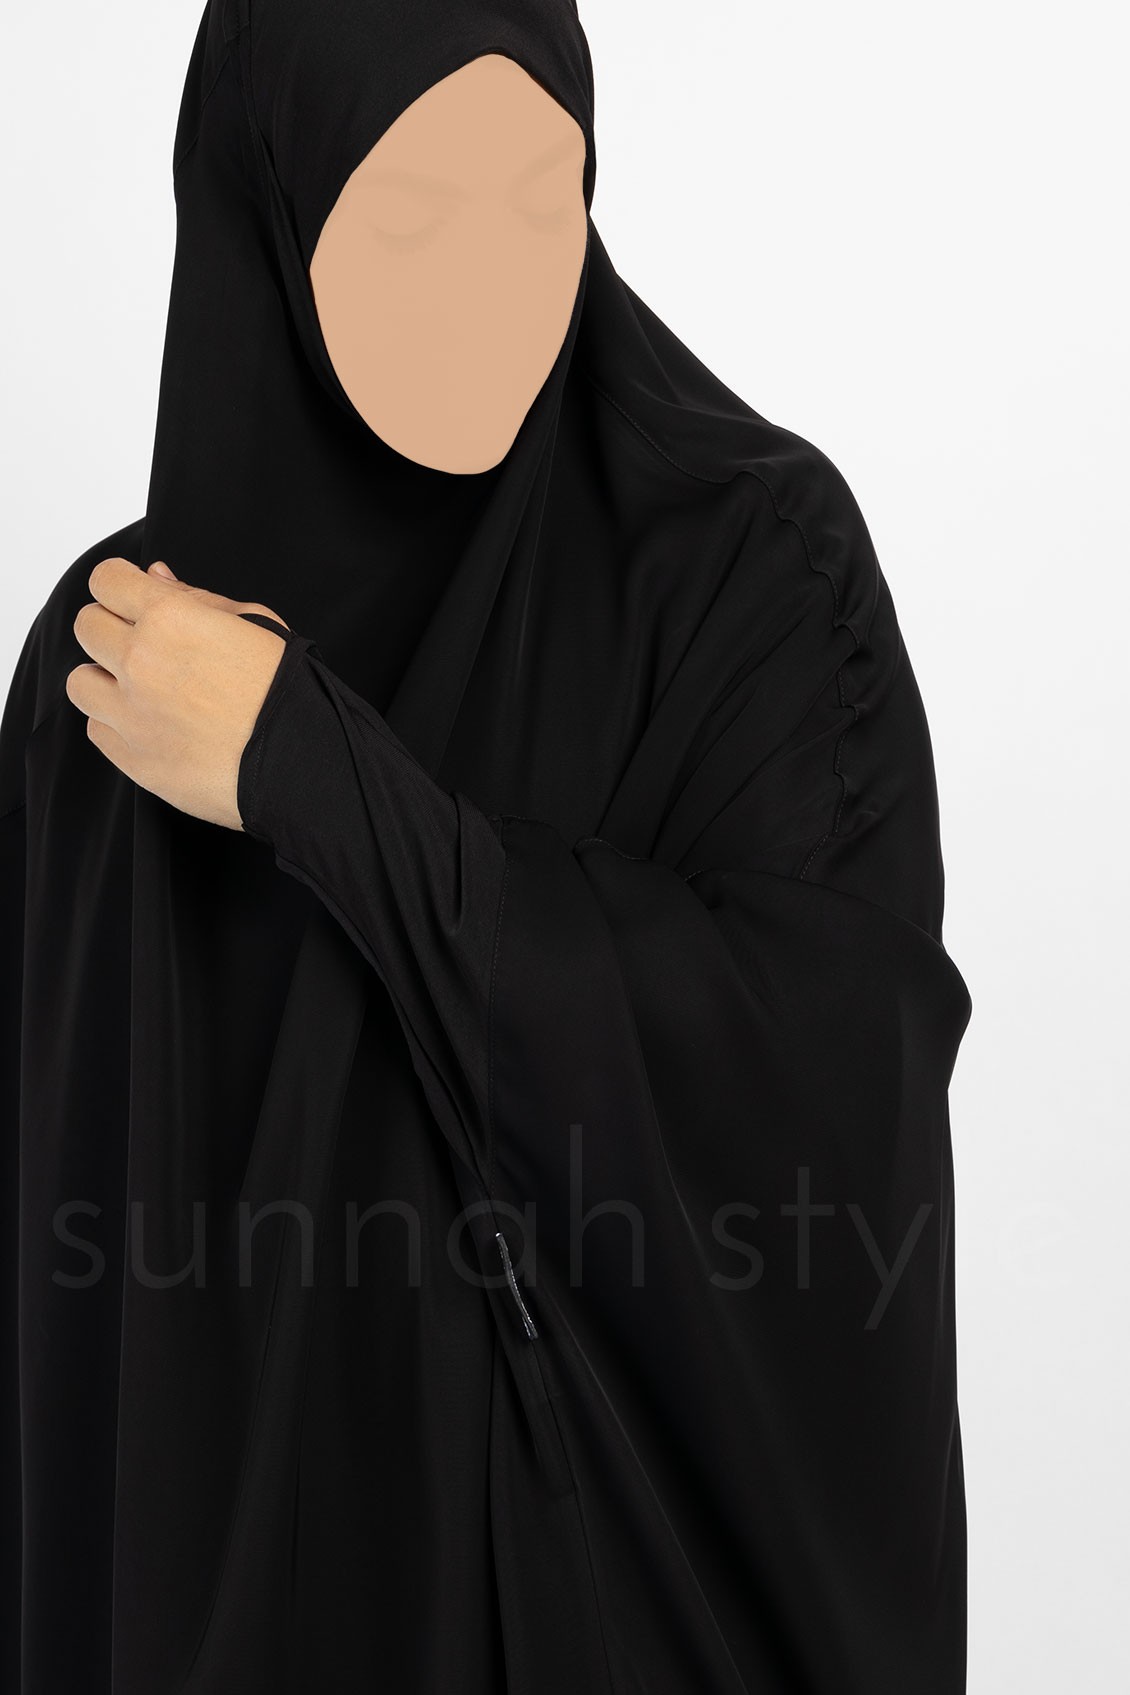 Sunnah Style Signature Jilbab Top Knee Length Black